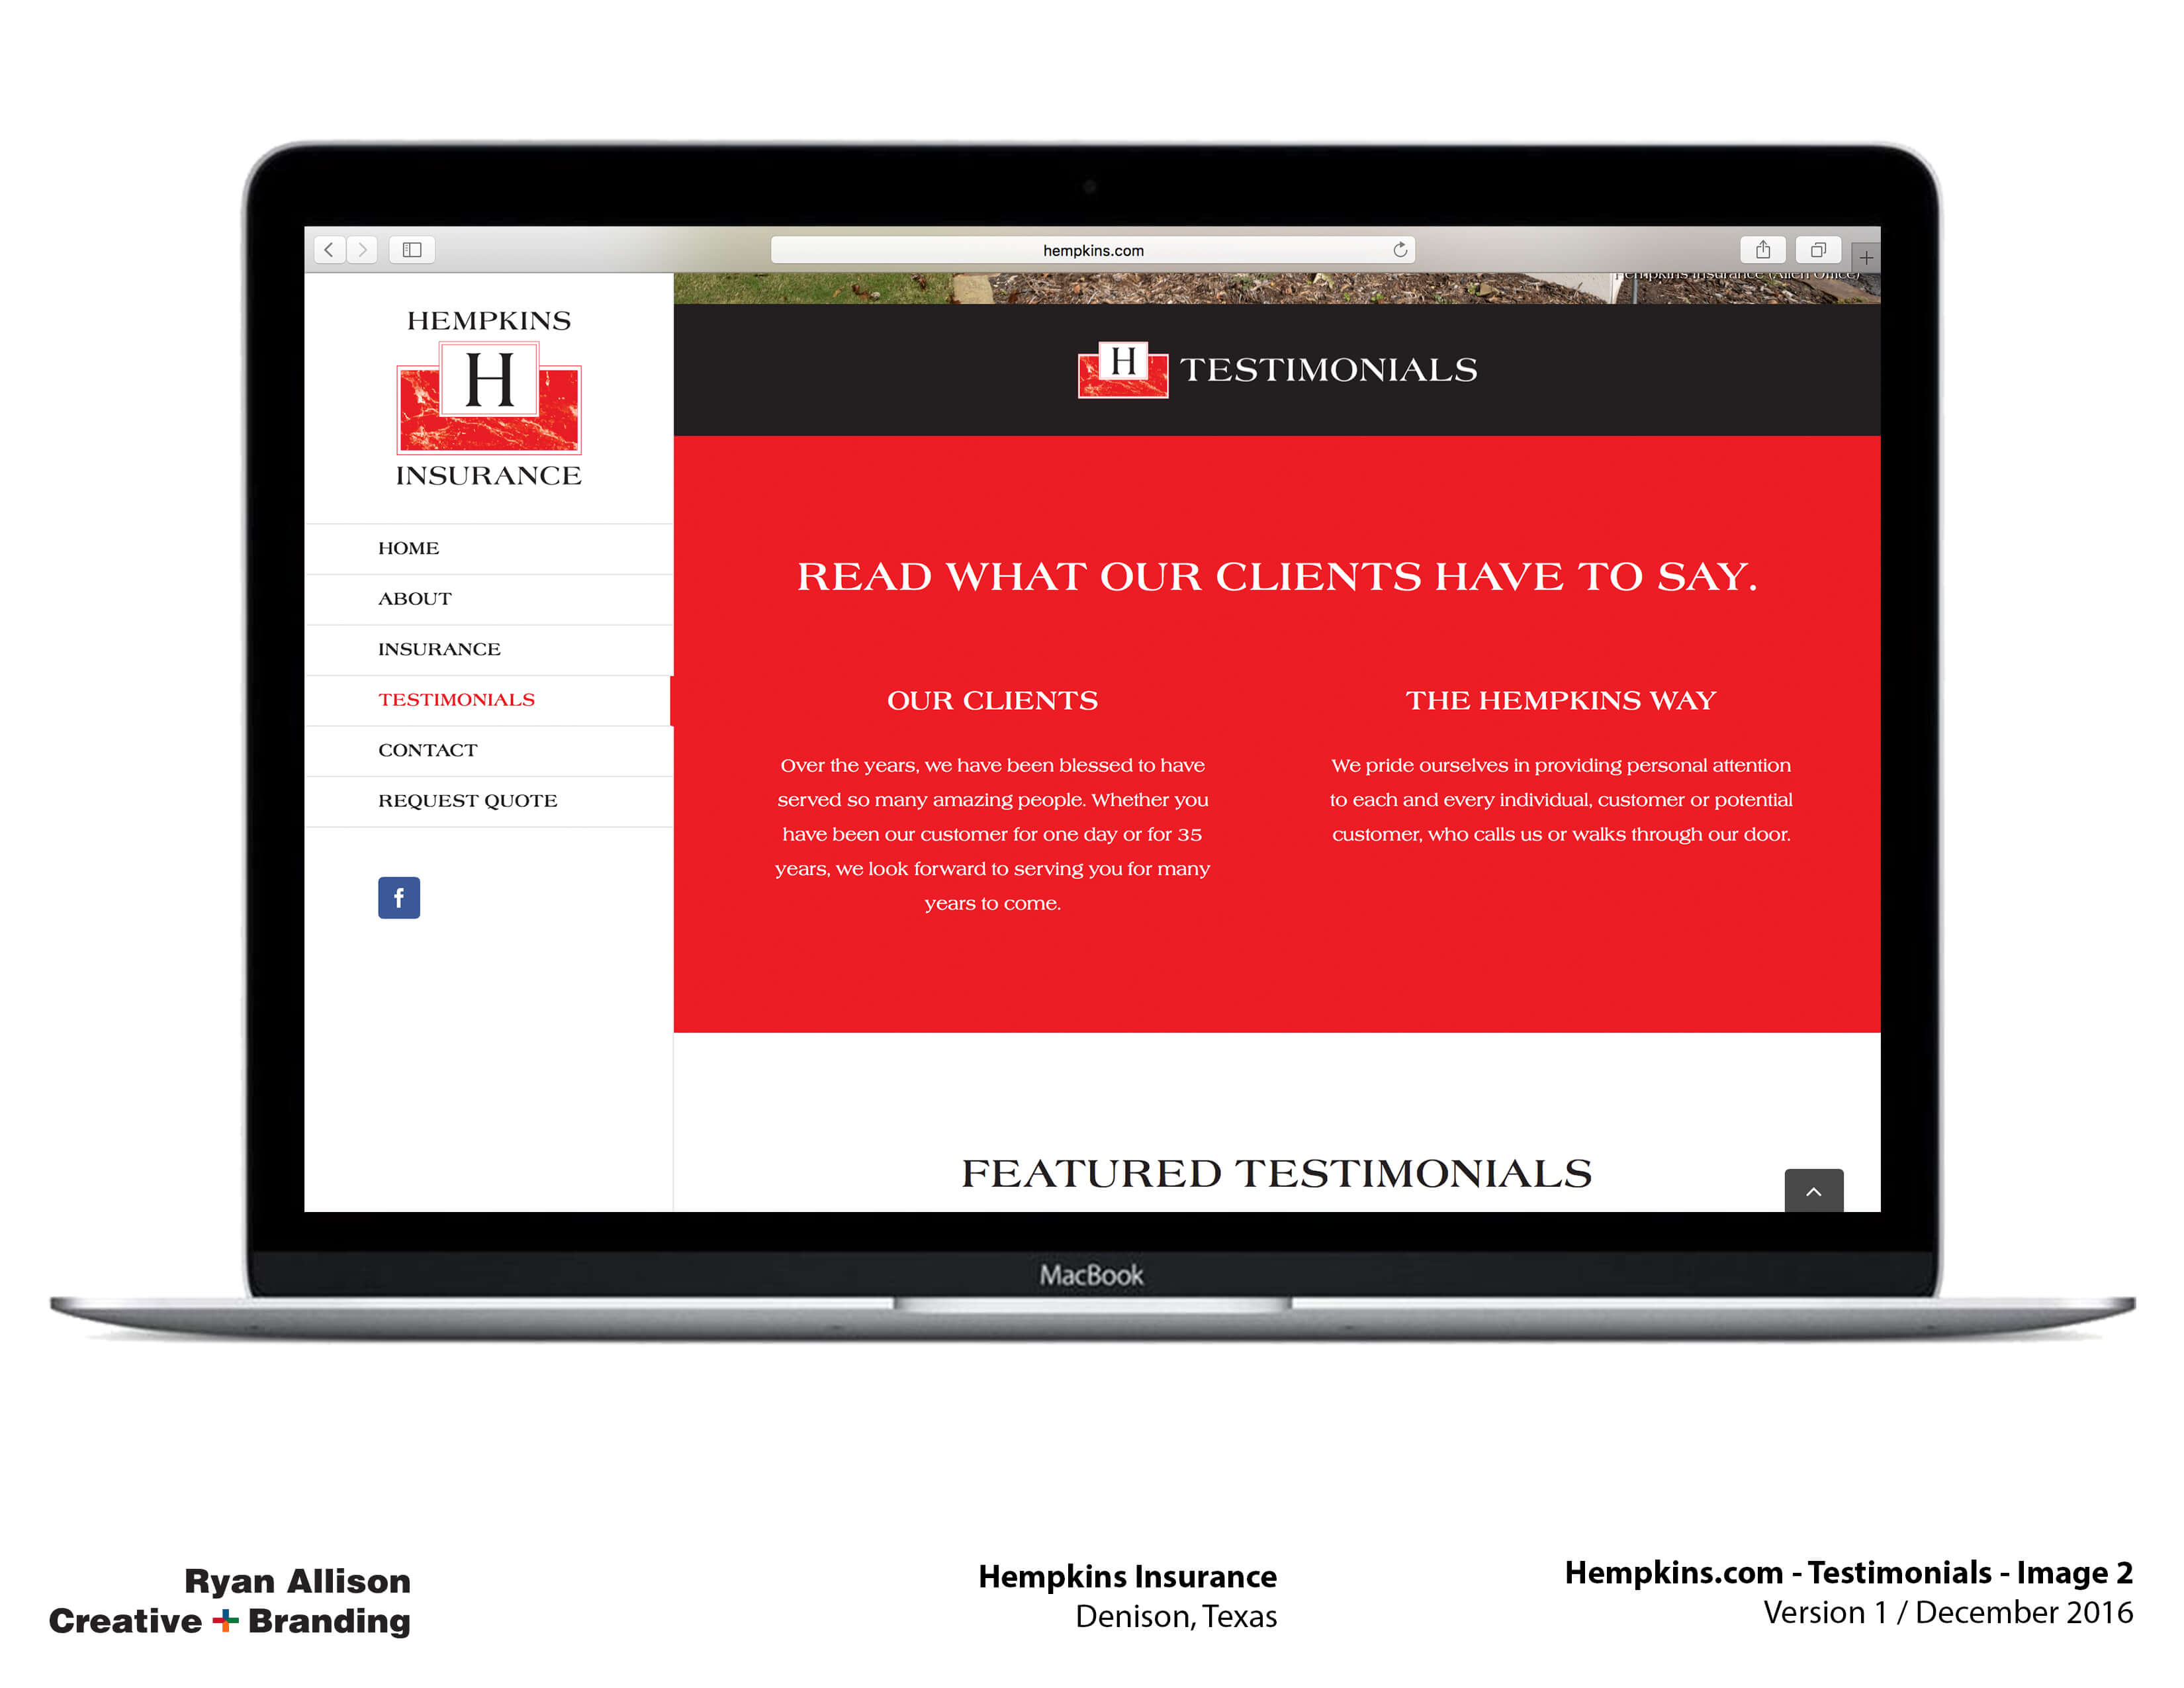 Hempkins Insurance Website Testimonials 2 - Project - Ryan Allison Creative + Branding